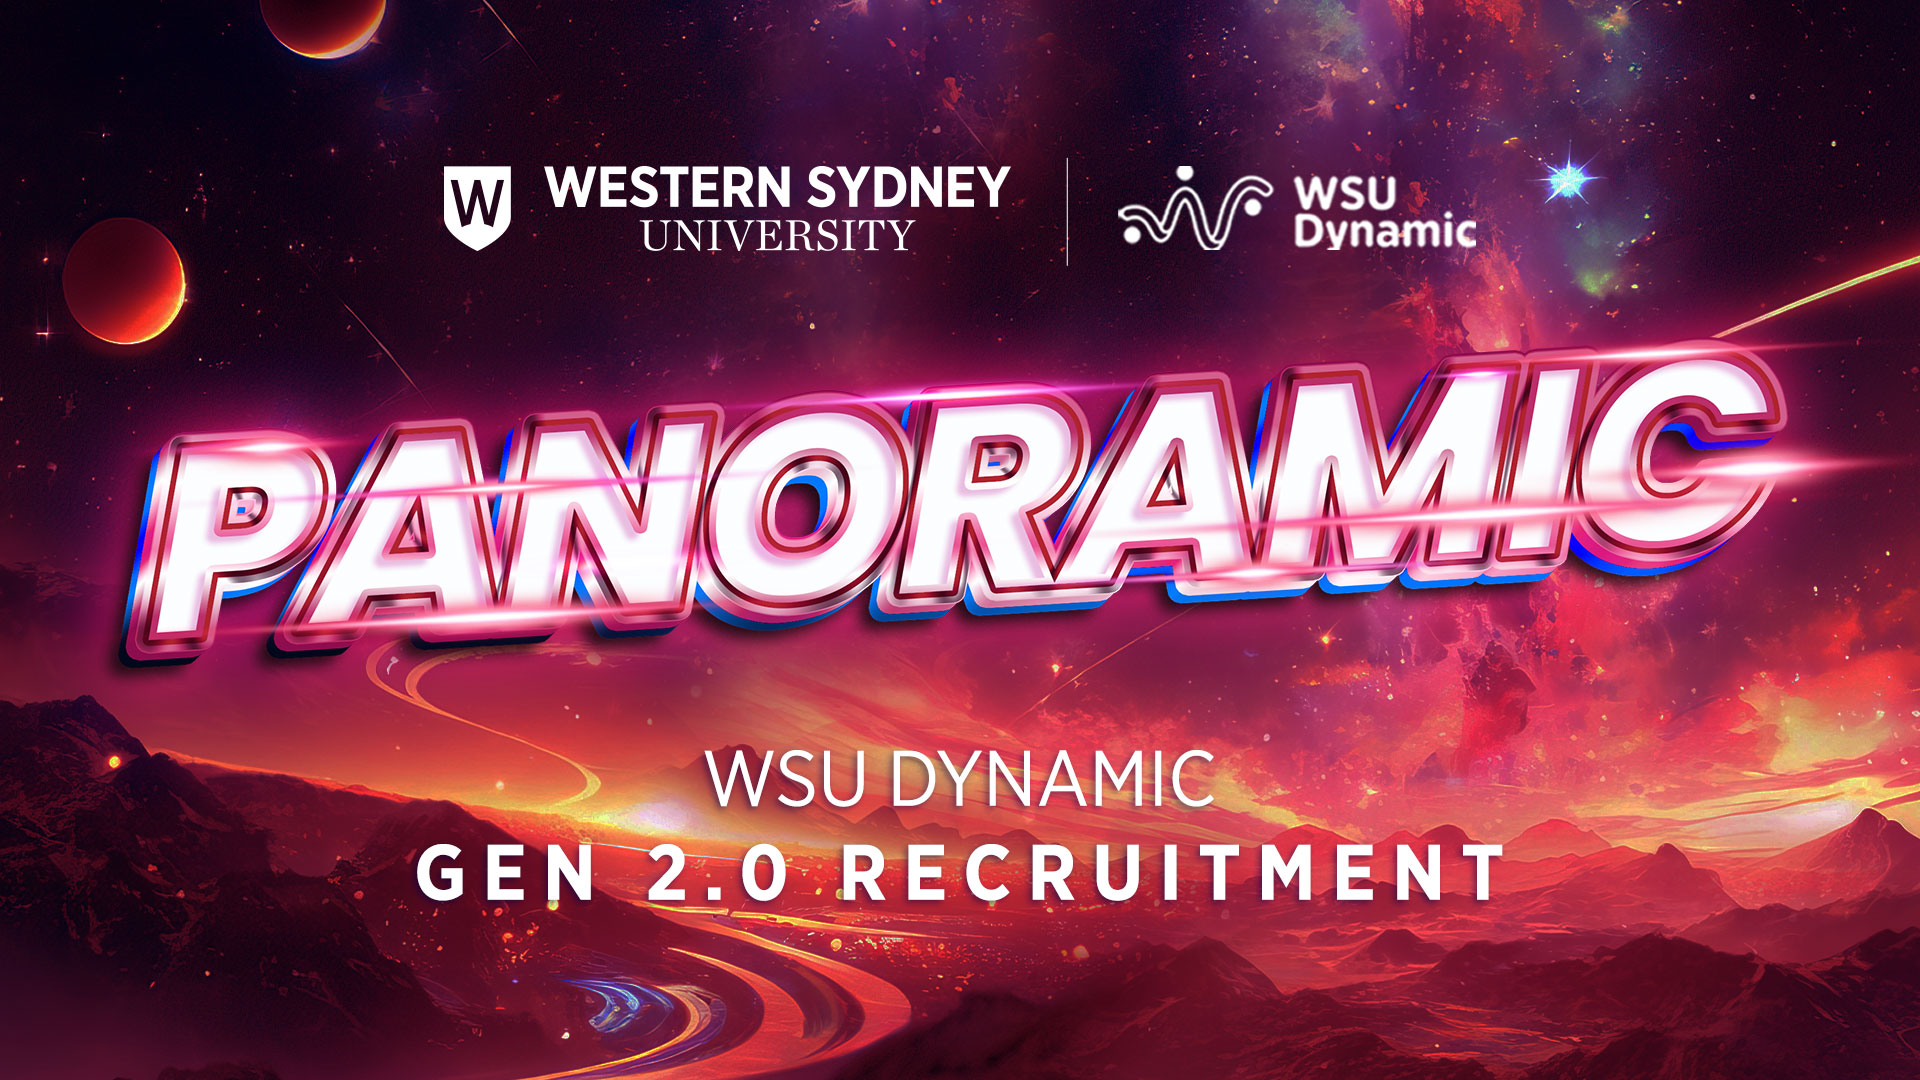 WSU Dynamic - Gen 2.0 Recruitment: PANORAMIC - Go Beyond Yourself